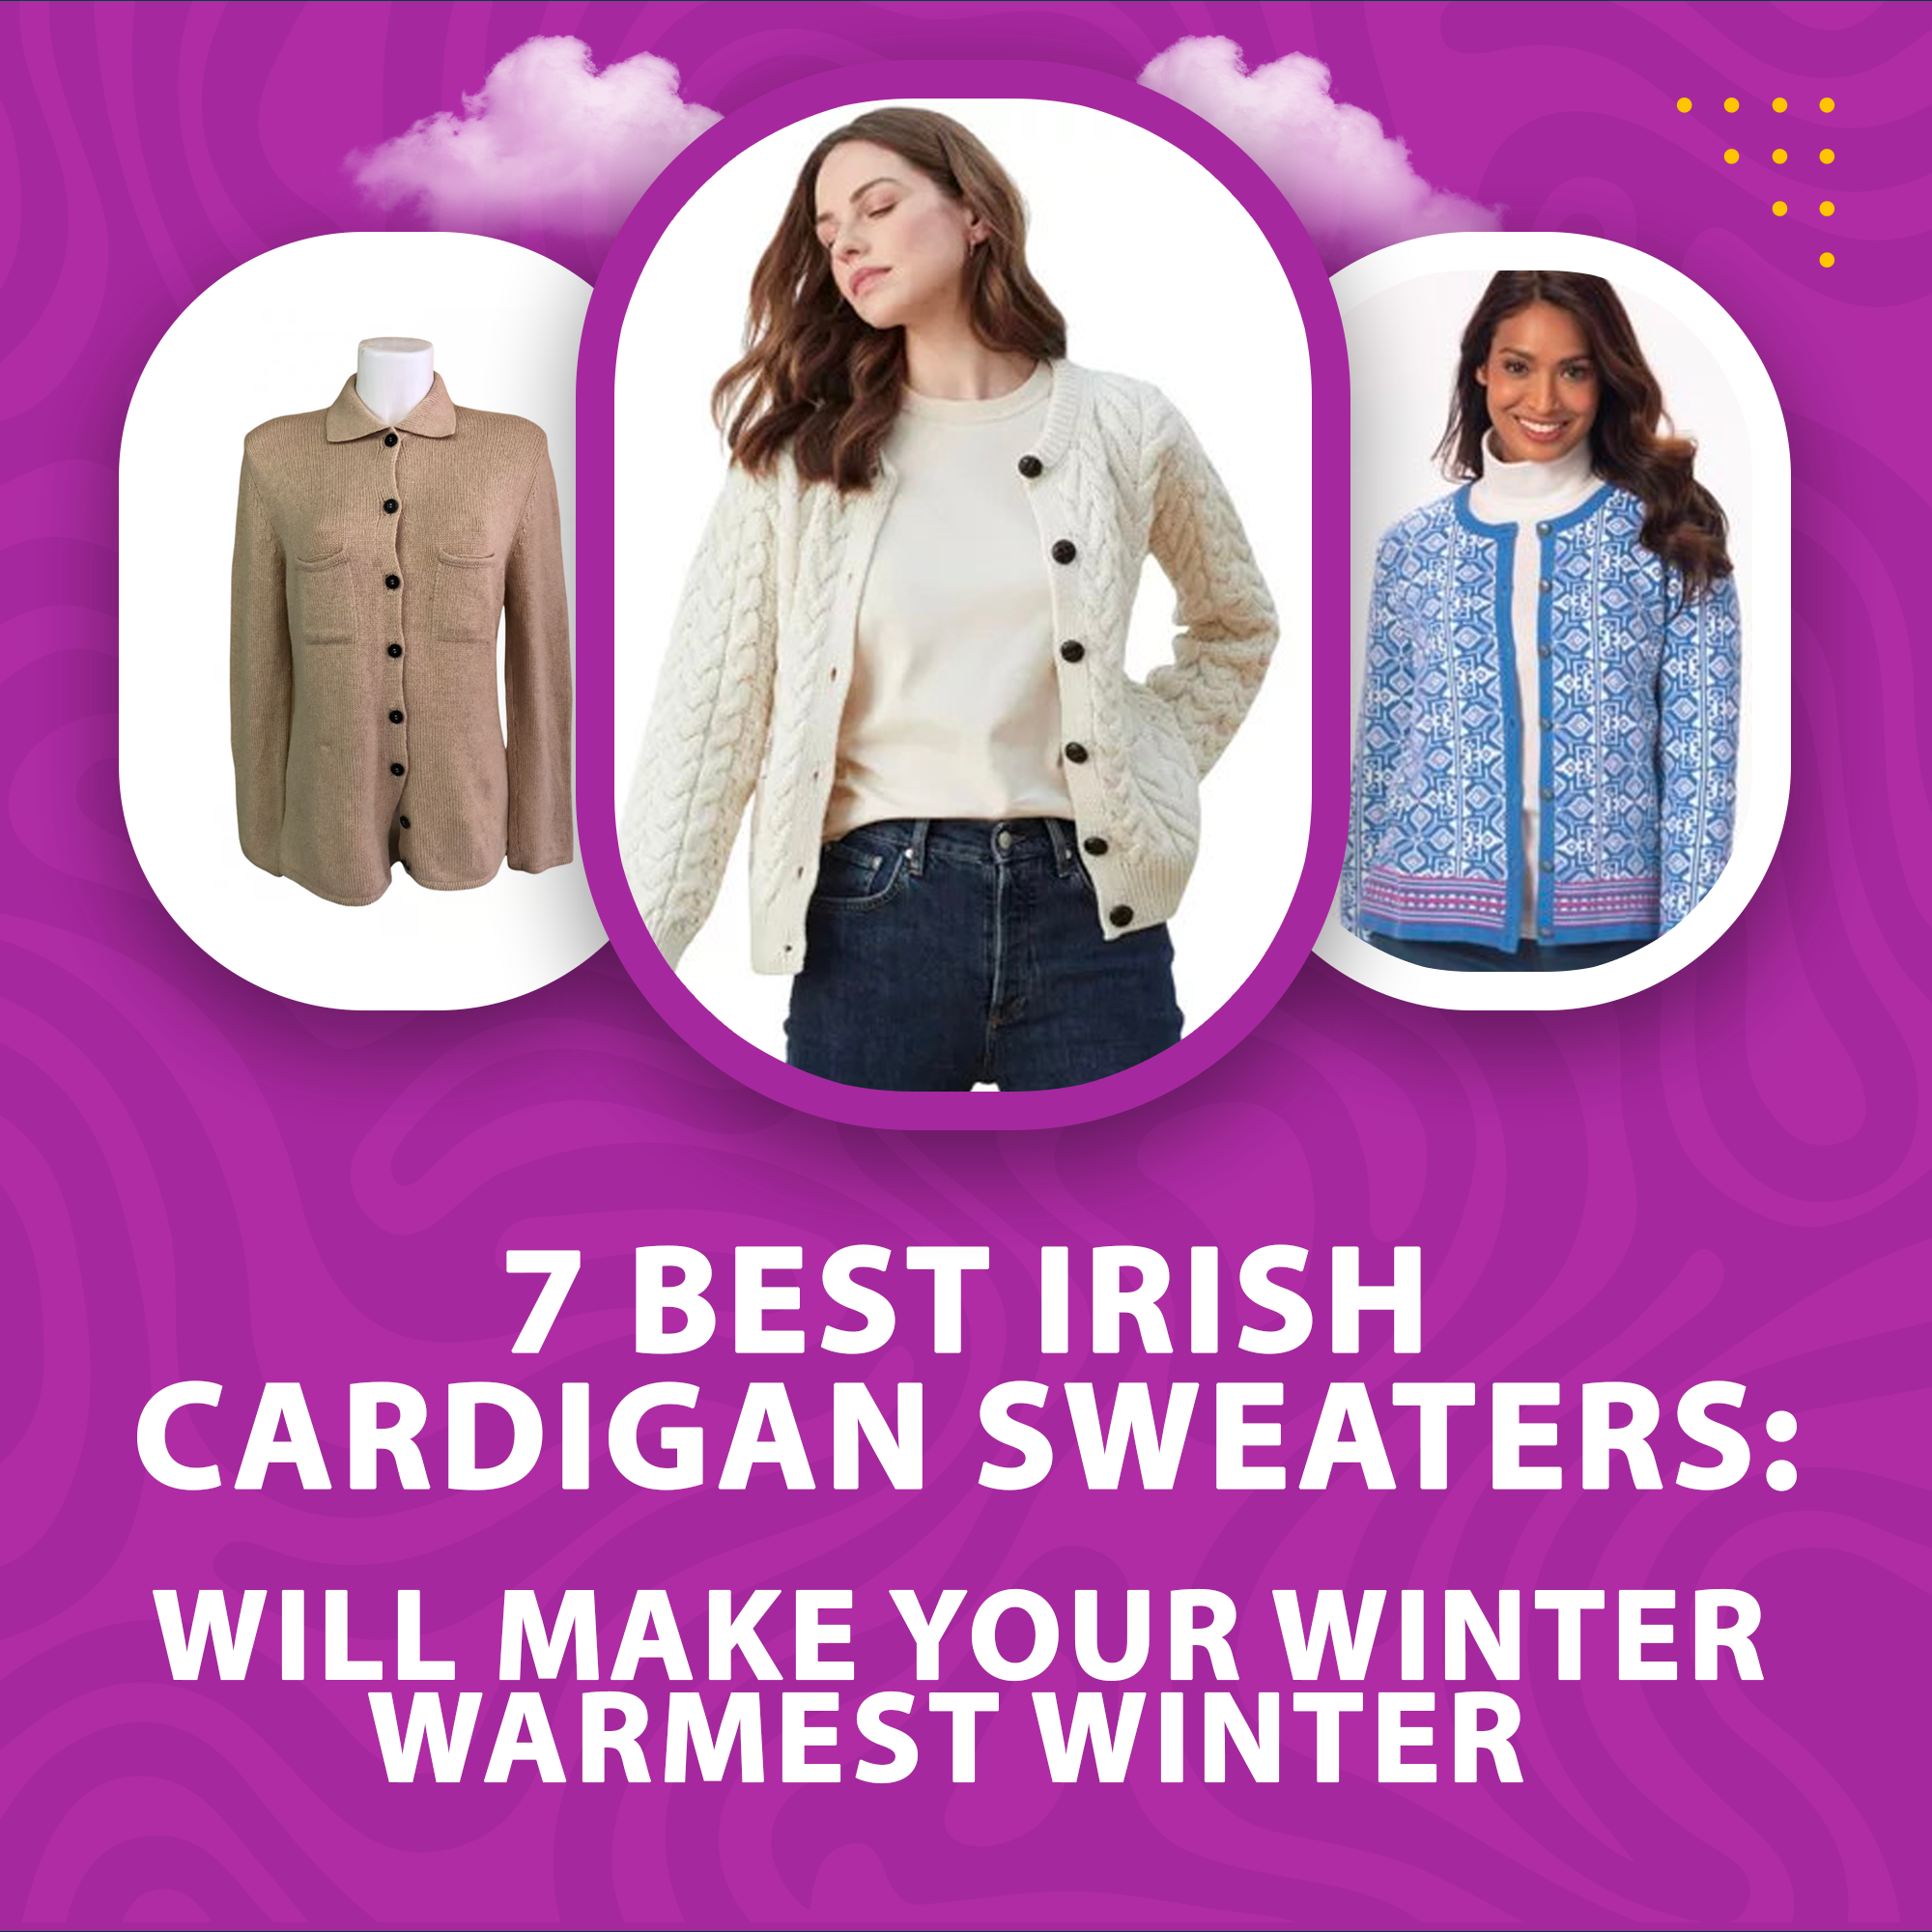 7 Best Irish Cardigan Sweaters: Will Make Your Winter Warmest Winter